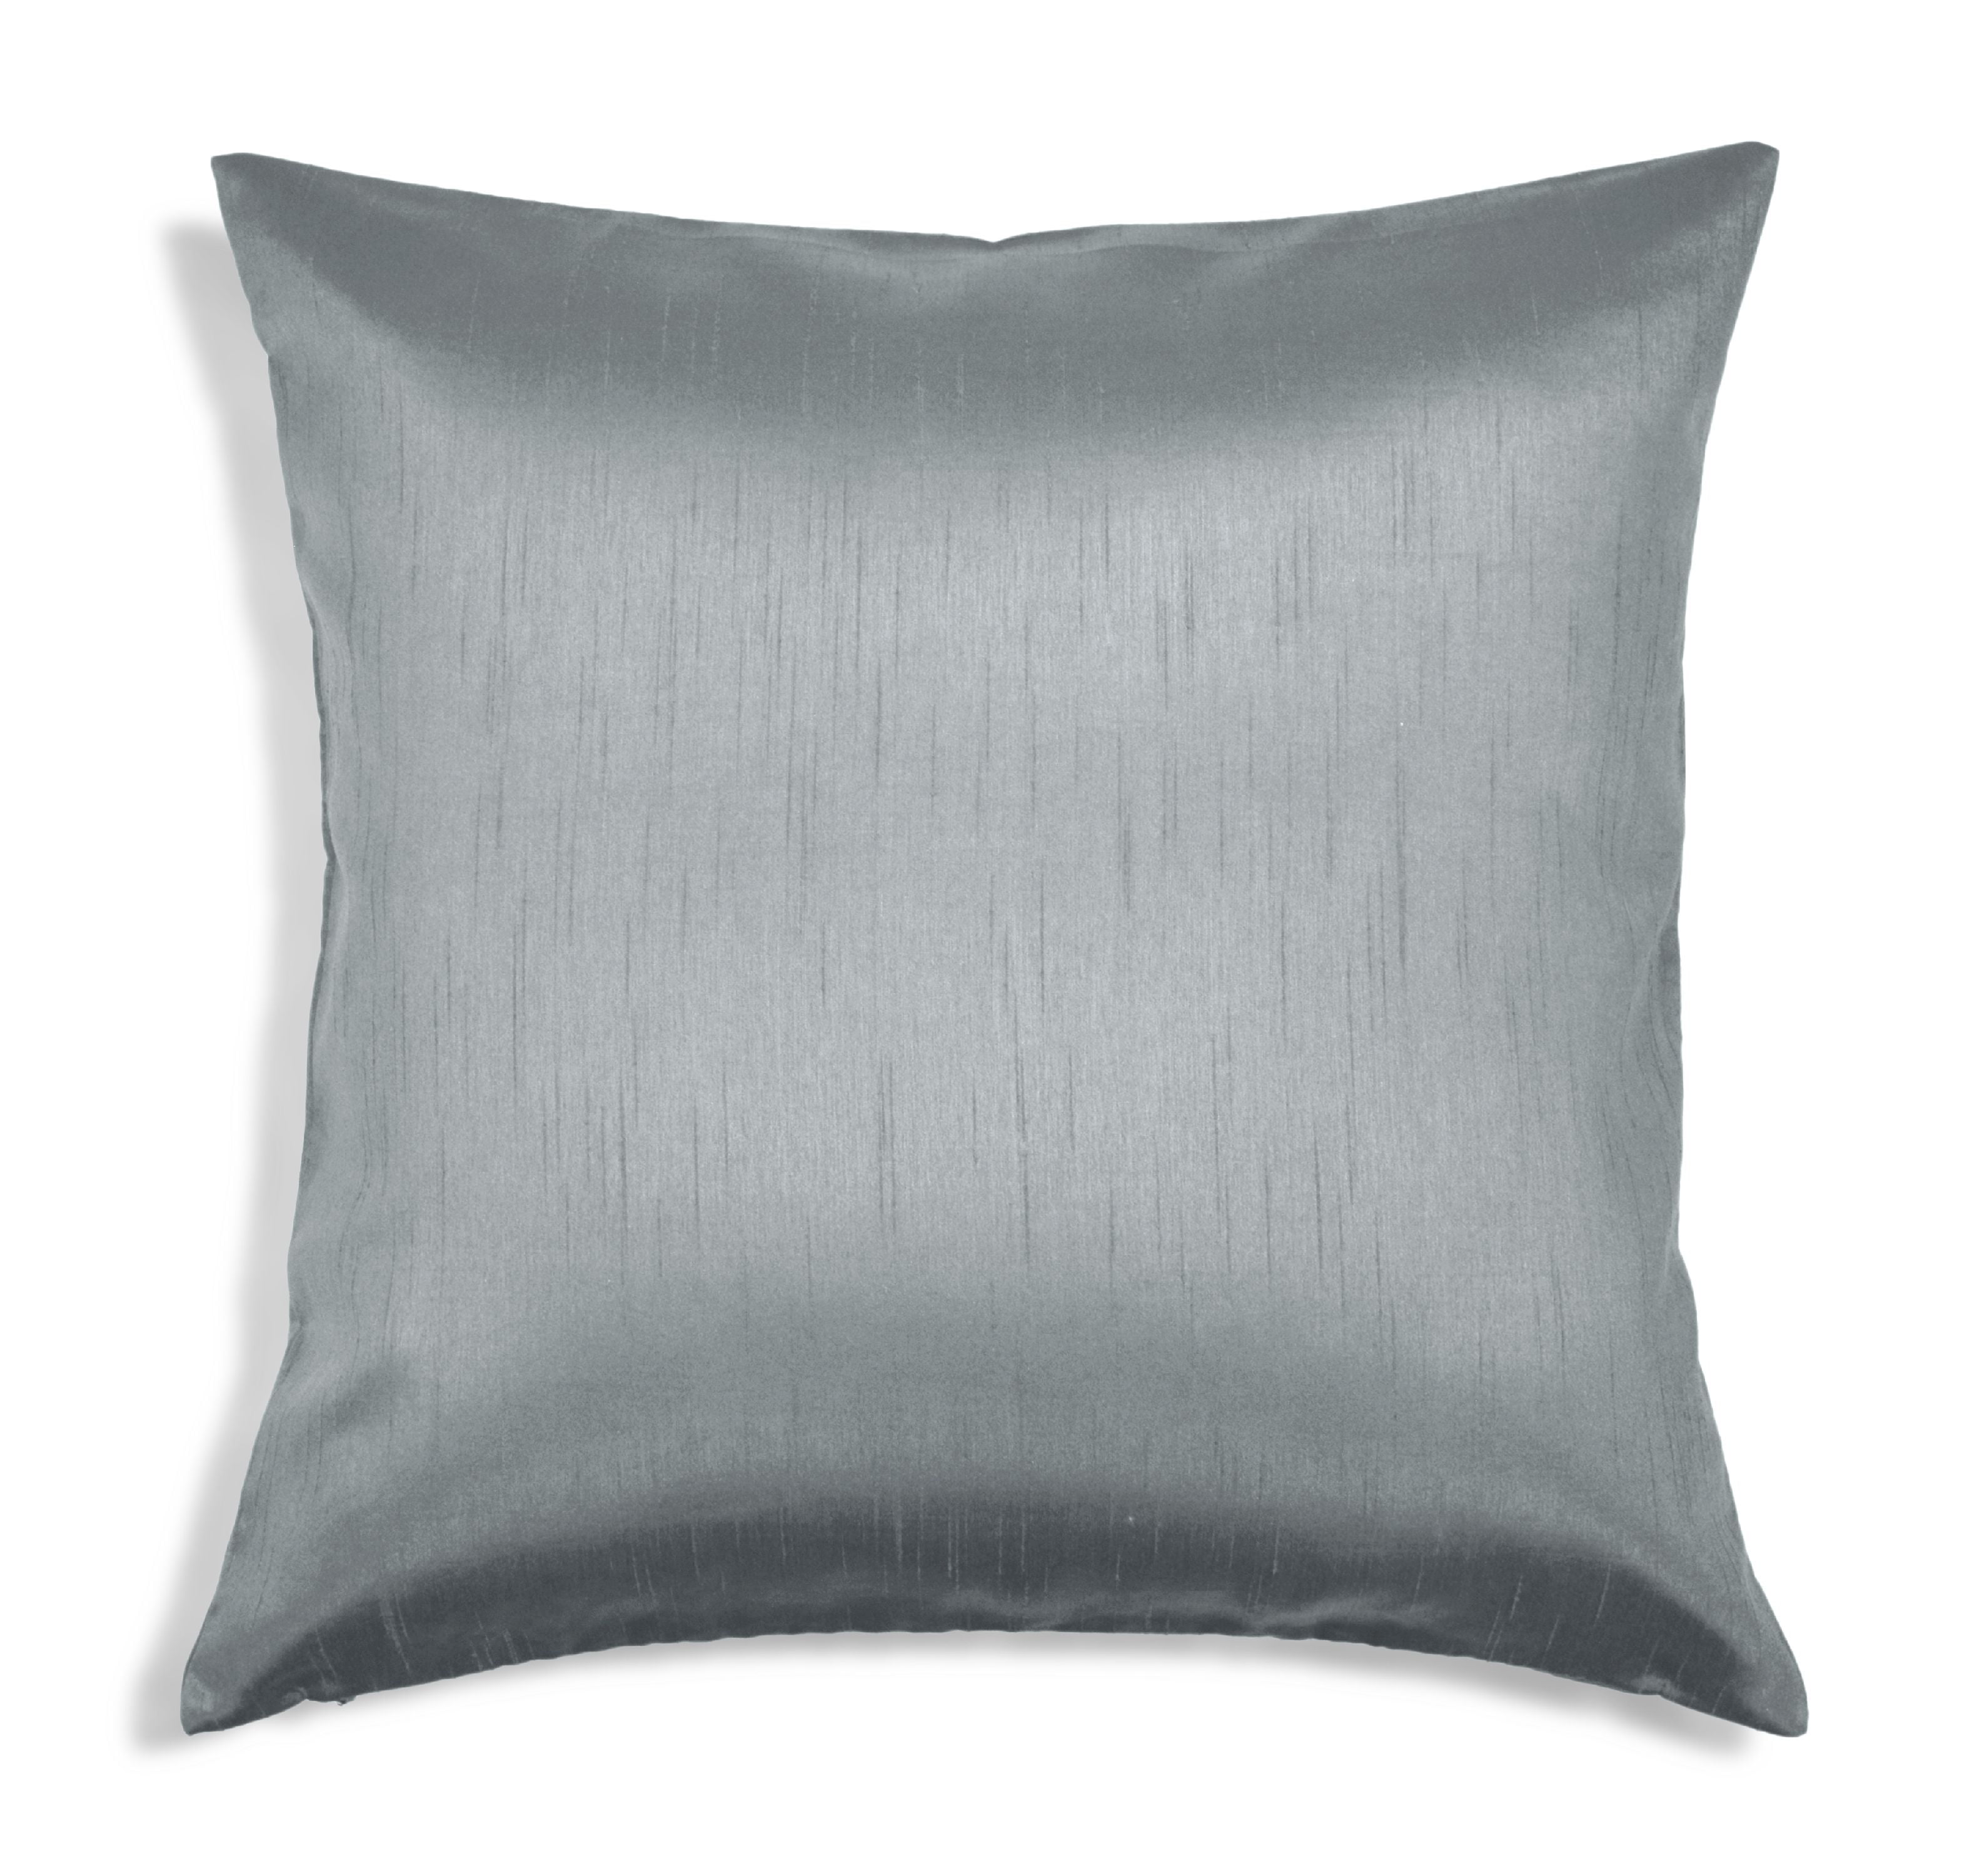 Aiking Home Solid Faux Silk Euro Sham/Pillow Cover Sage 26 by 26 Inches Zipper Closure